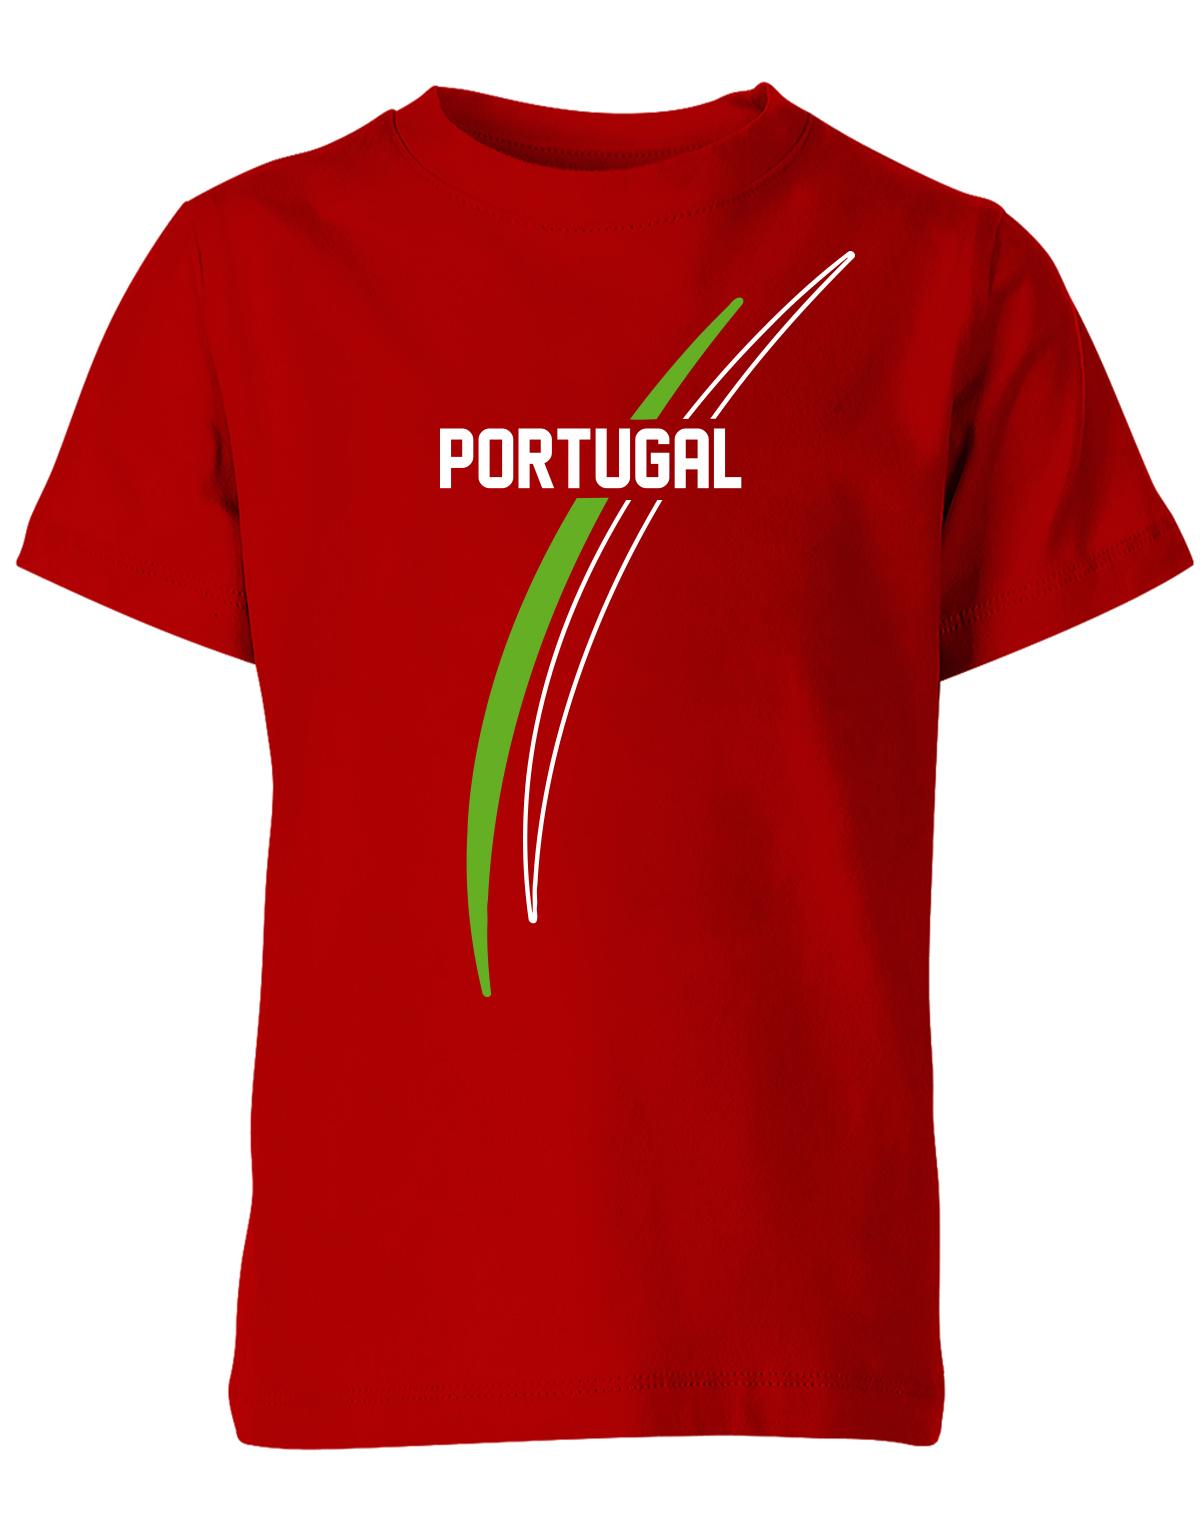 Portugal-Kinder-Shirt-Rot